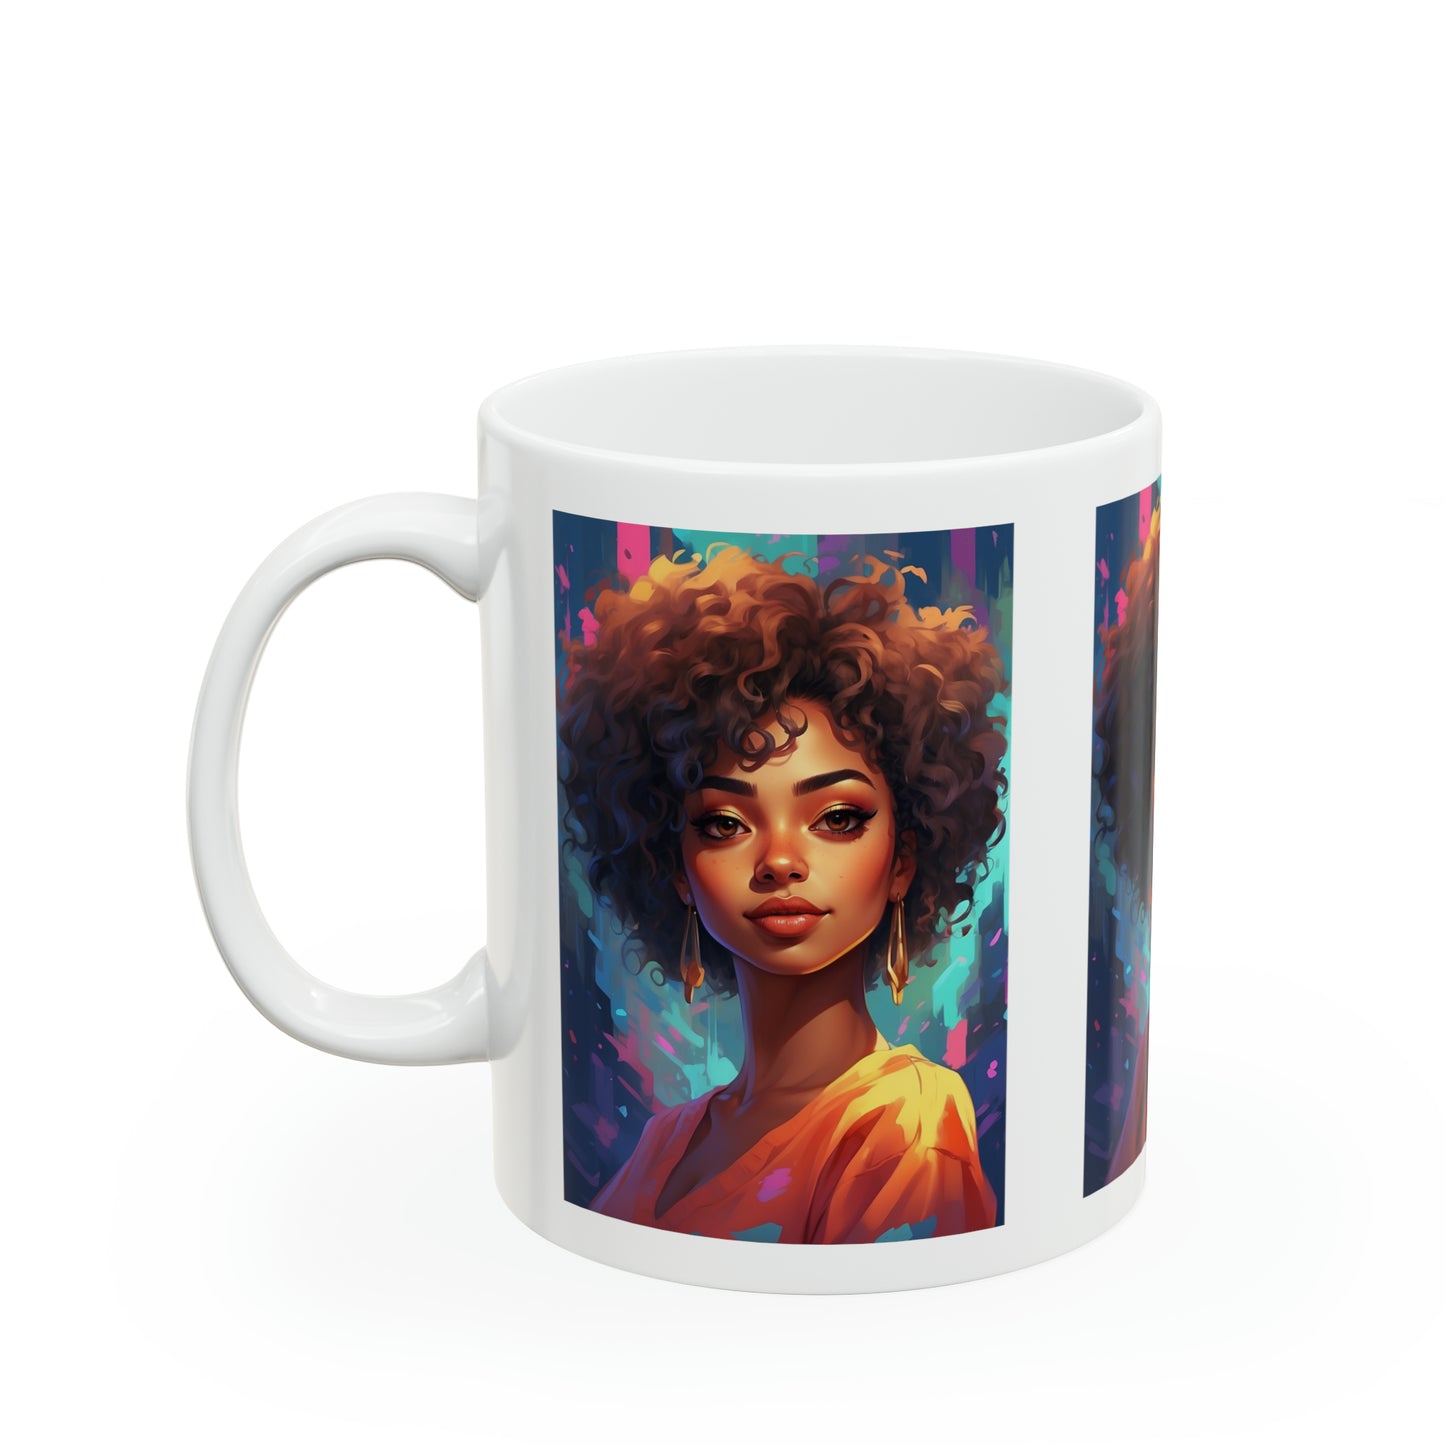 Yasmine Dreams | HD Graphic | Black Girl | Black Queens | Animated | Coffee | Tea | Hot Chocolate | Ceramic Mug | 11oz